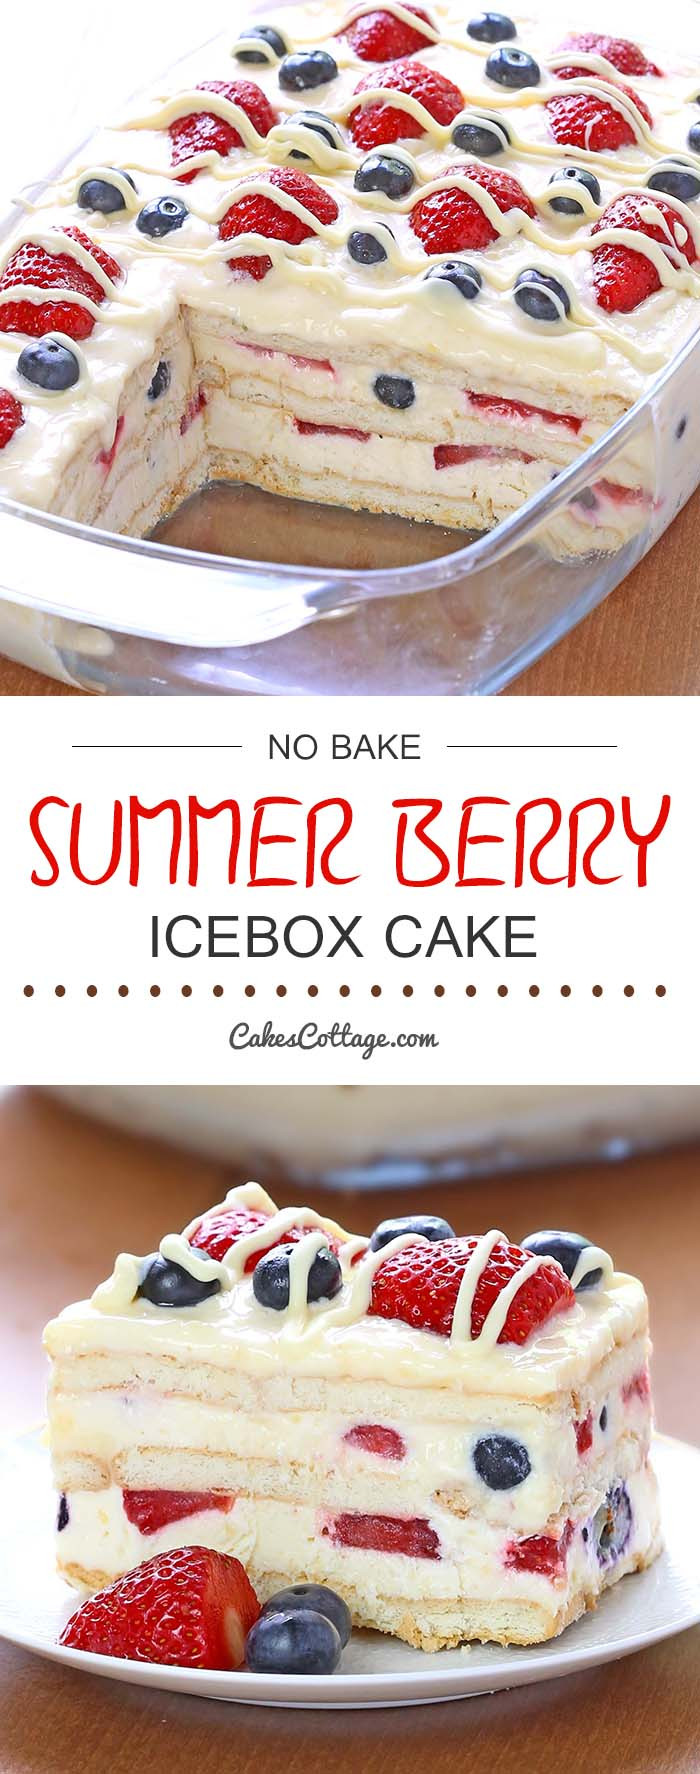 Summer Easy Desserts
 No Bake Summer Berry Icebox Cake Cakescottage